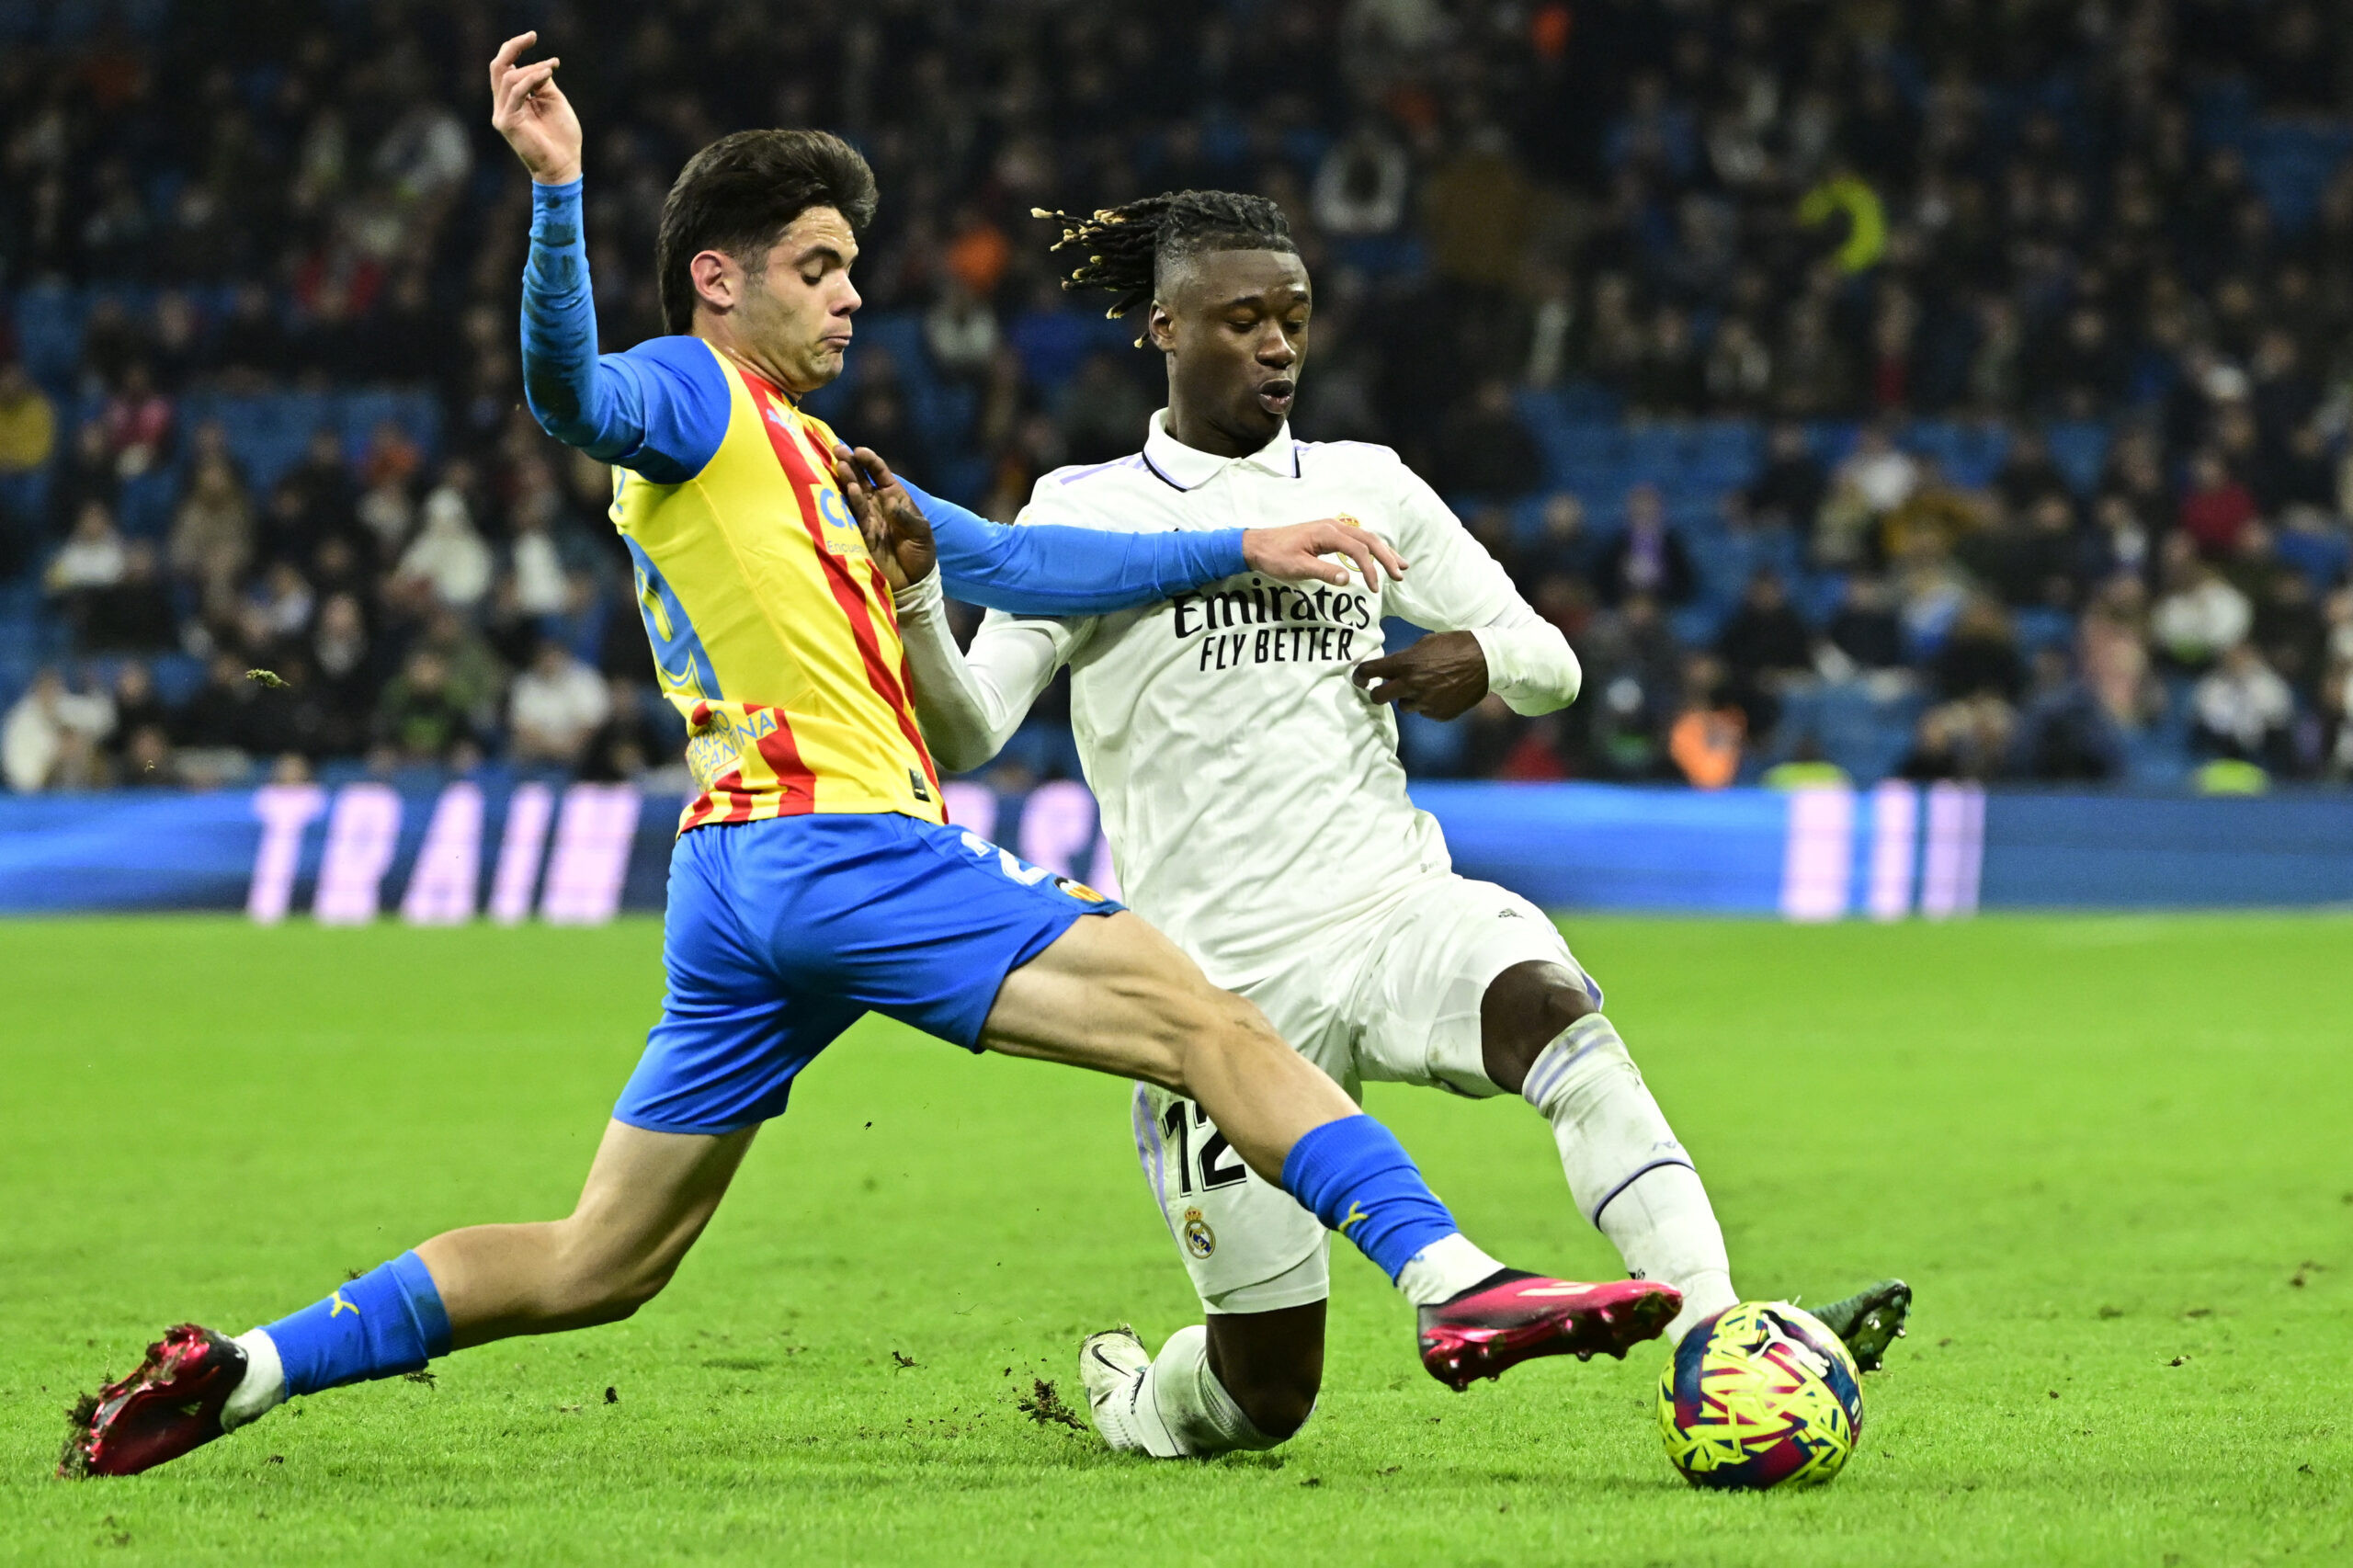 Valencia aiming for vital win over reeling Madrid